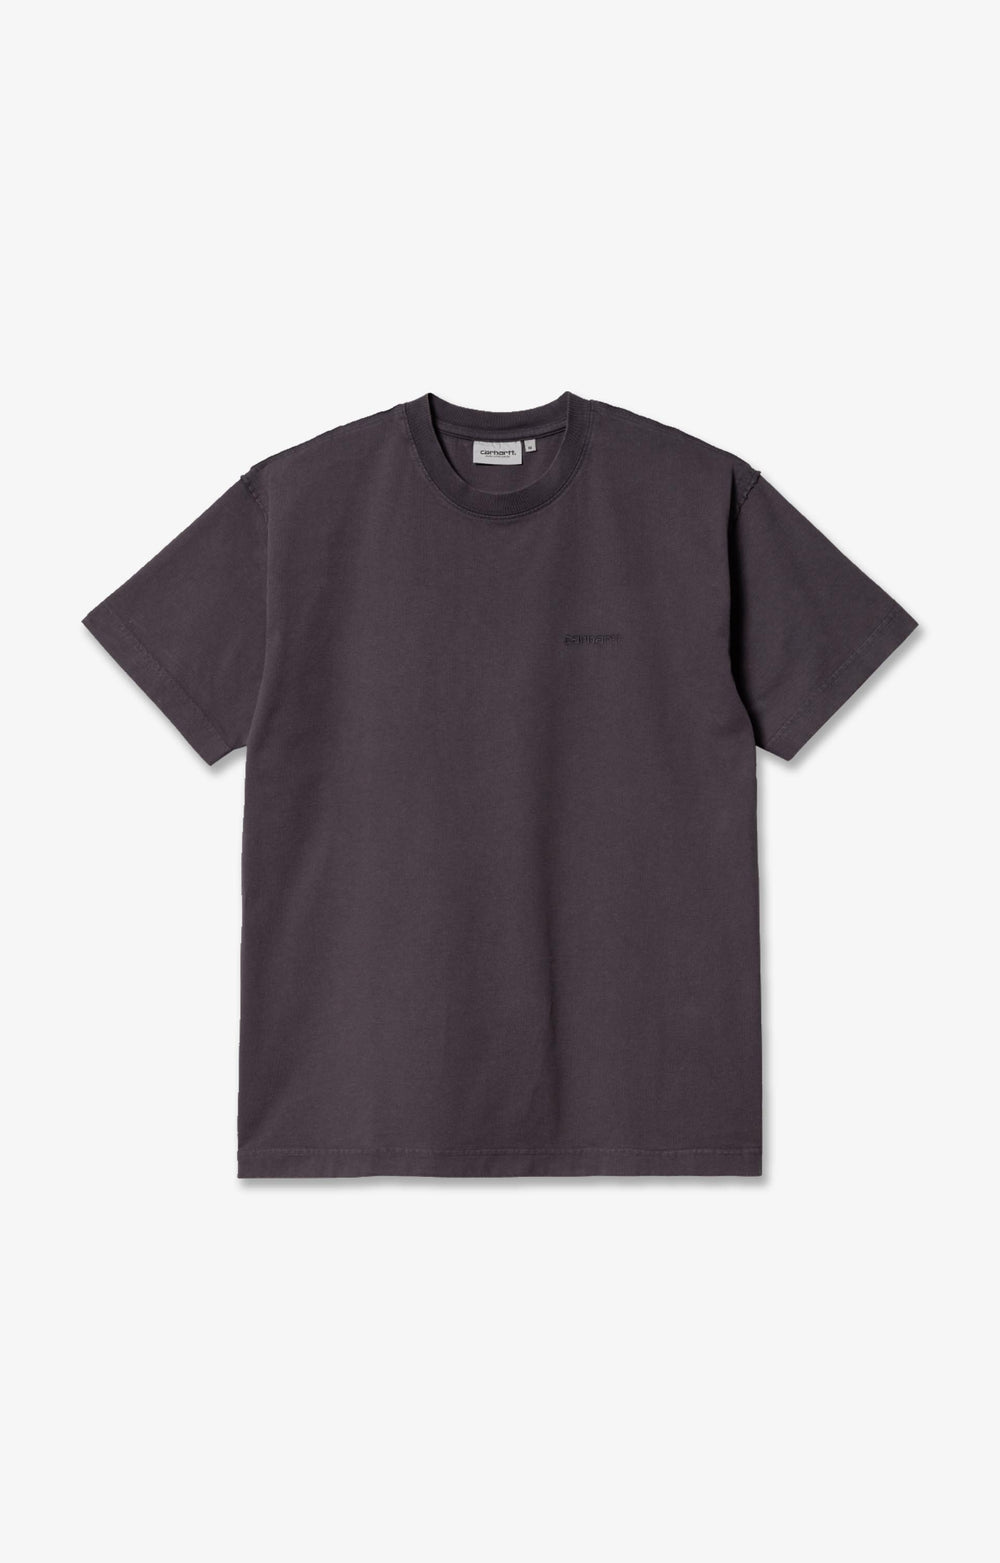 Carhartt WIP Marfa T-Shirt, Artichoke